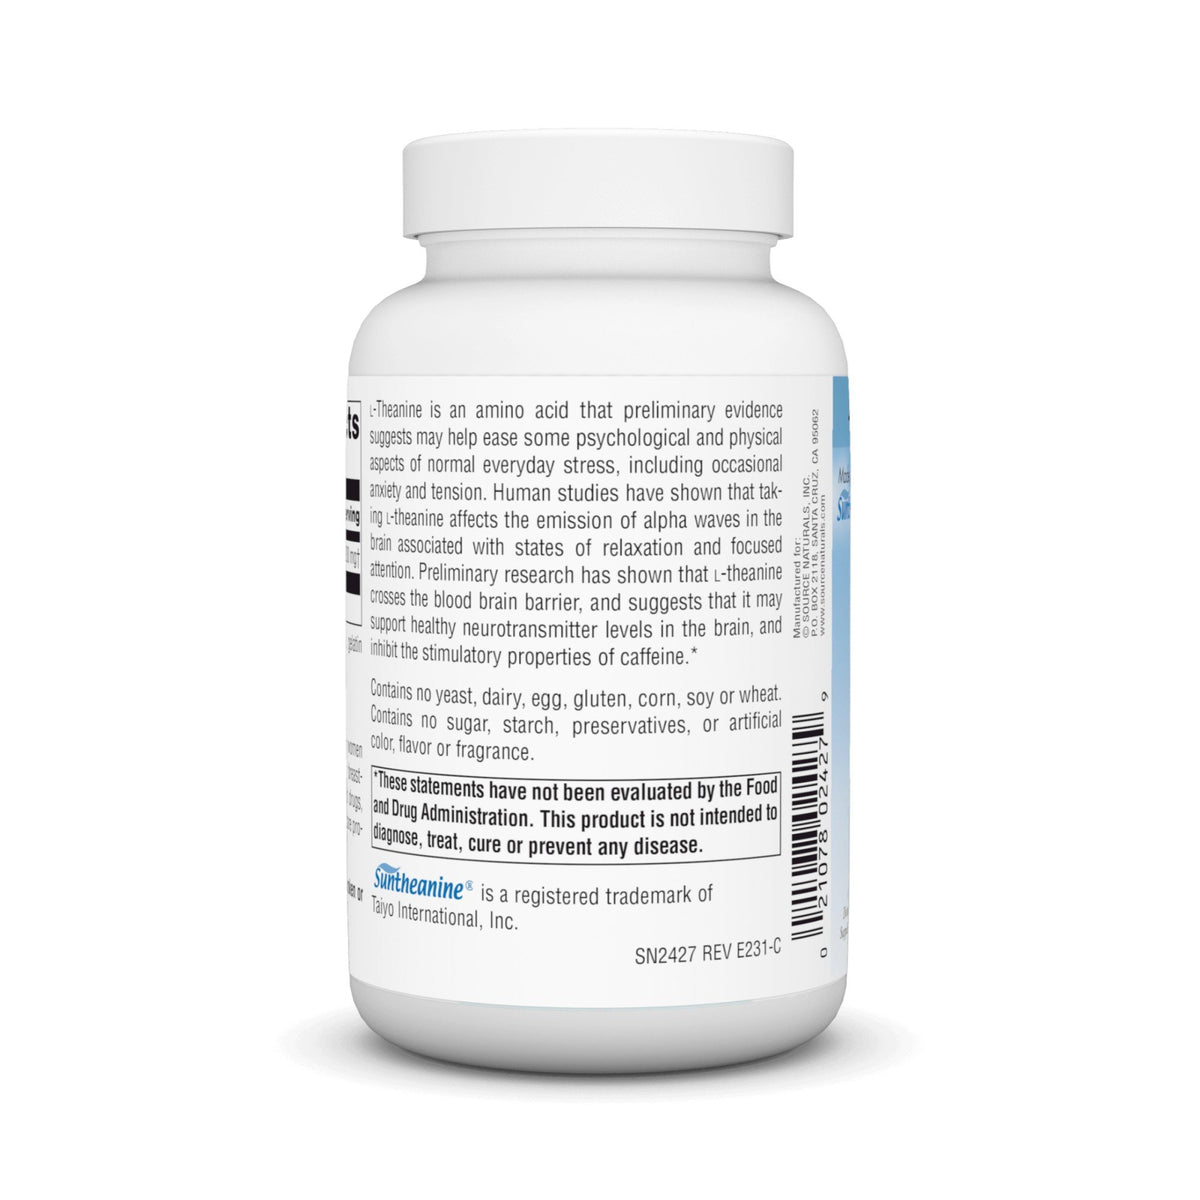 Source Naturals, Inc. L-Theanine 200 mg 120 Capsule